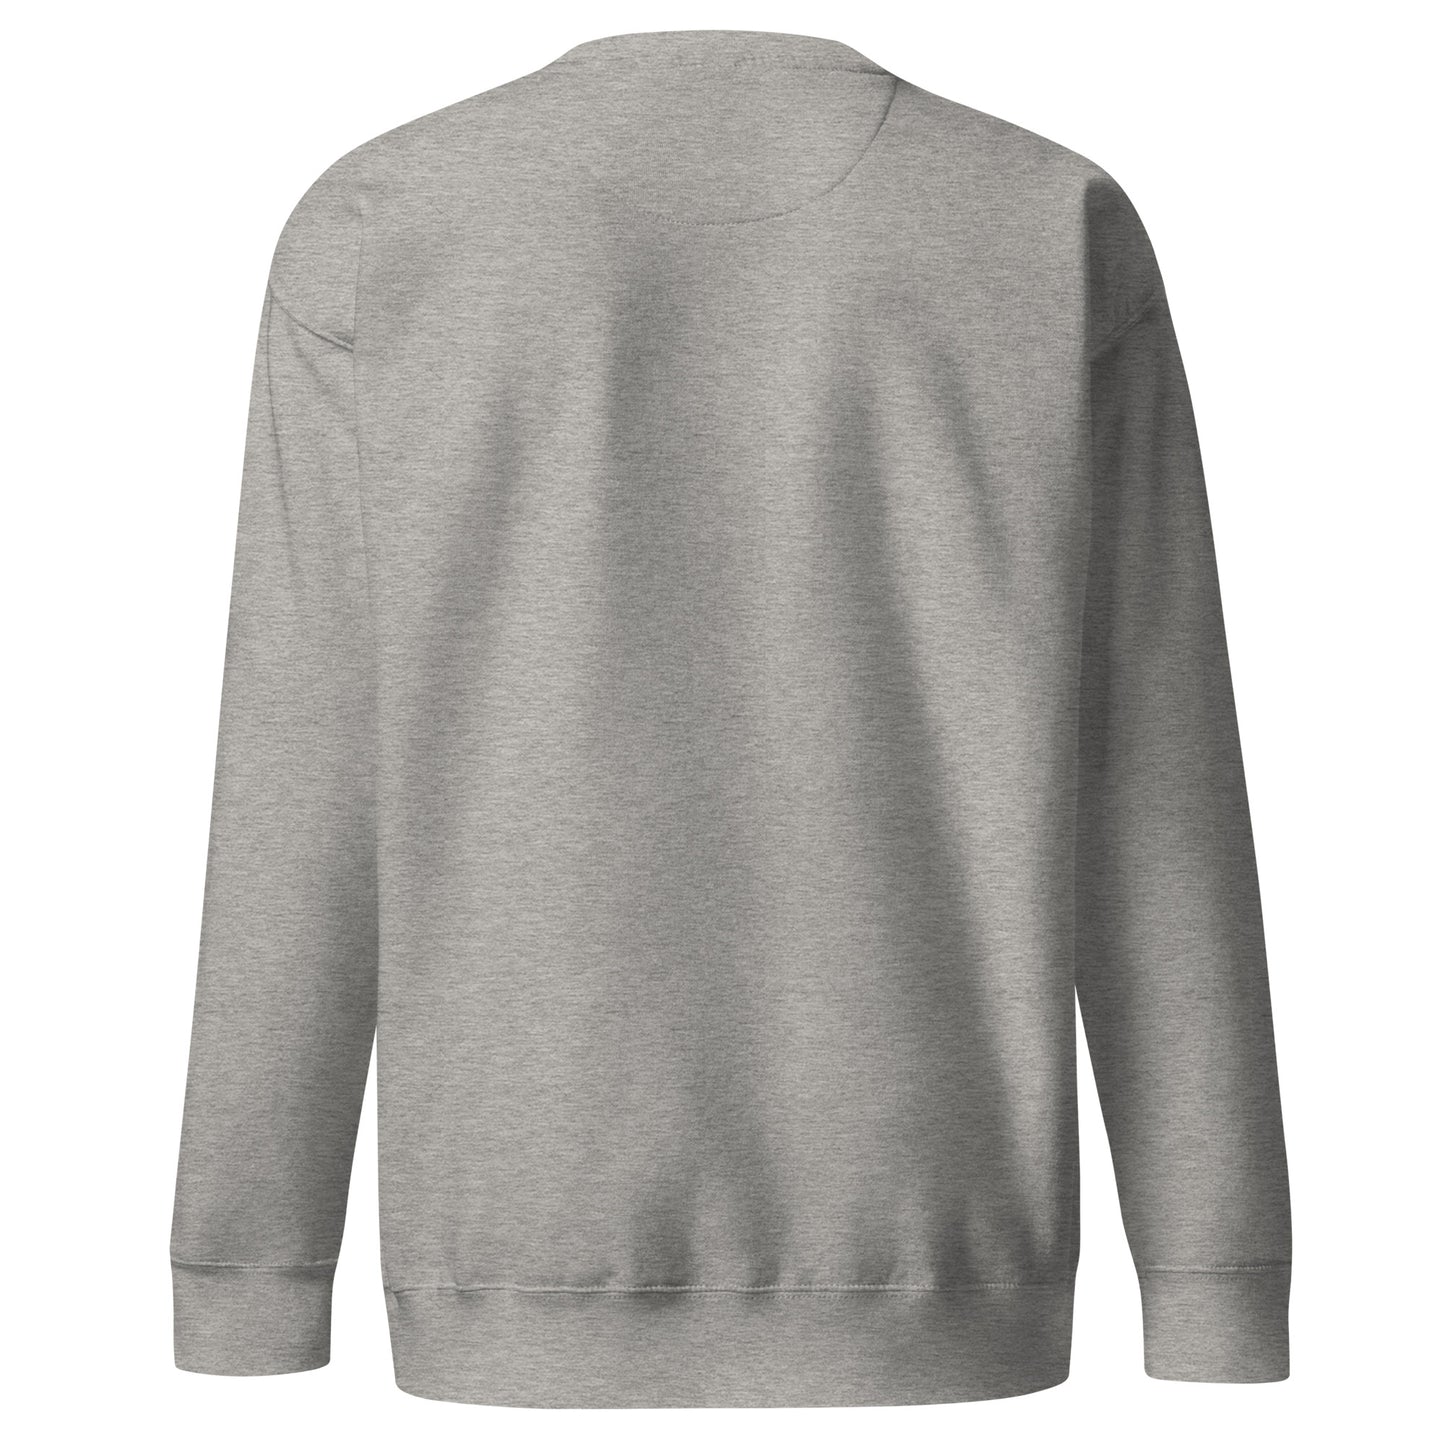 Bennet Sisters Unisex Premium Sweatshirt